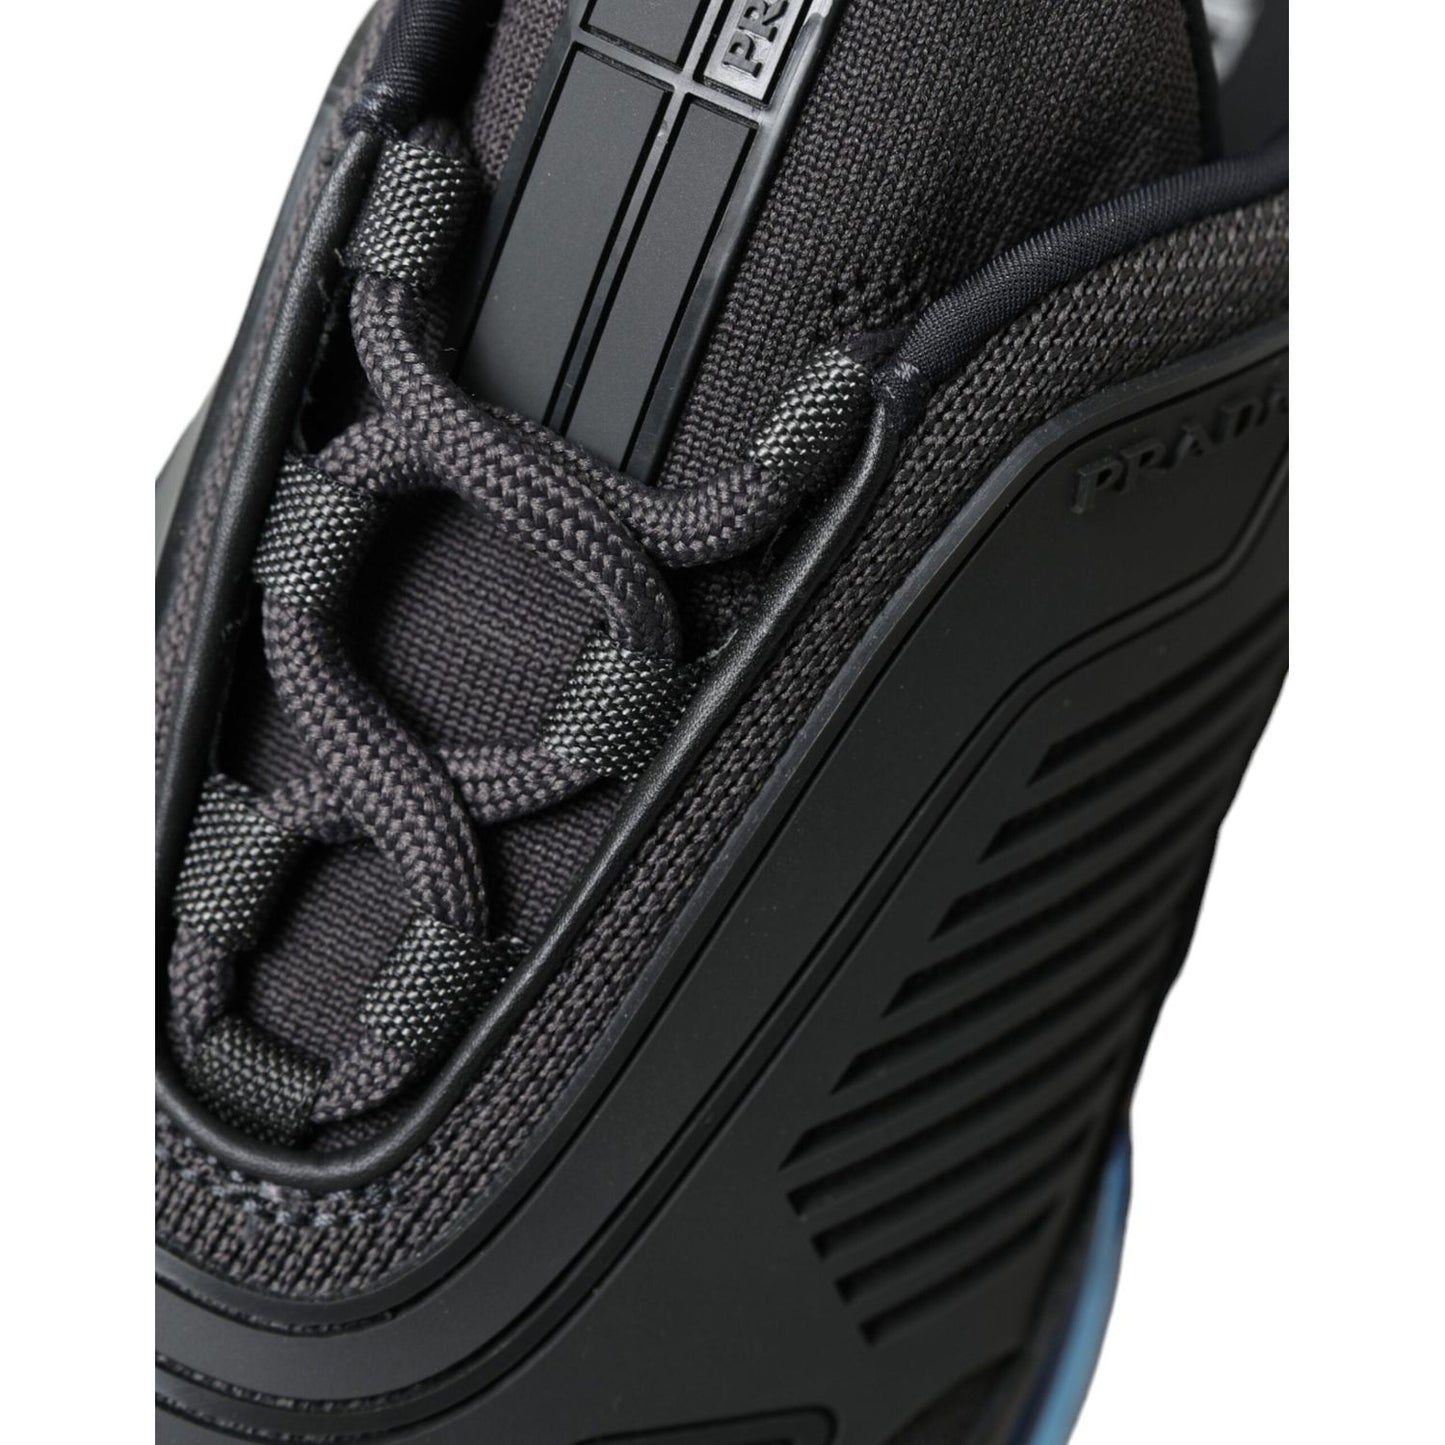 Prada Elegant Men's Black Mesh Sneakers black-blue-rubber-knit-slip-on-low-top-sneakers-shoes